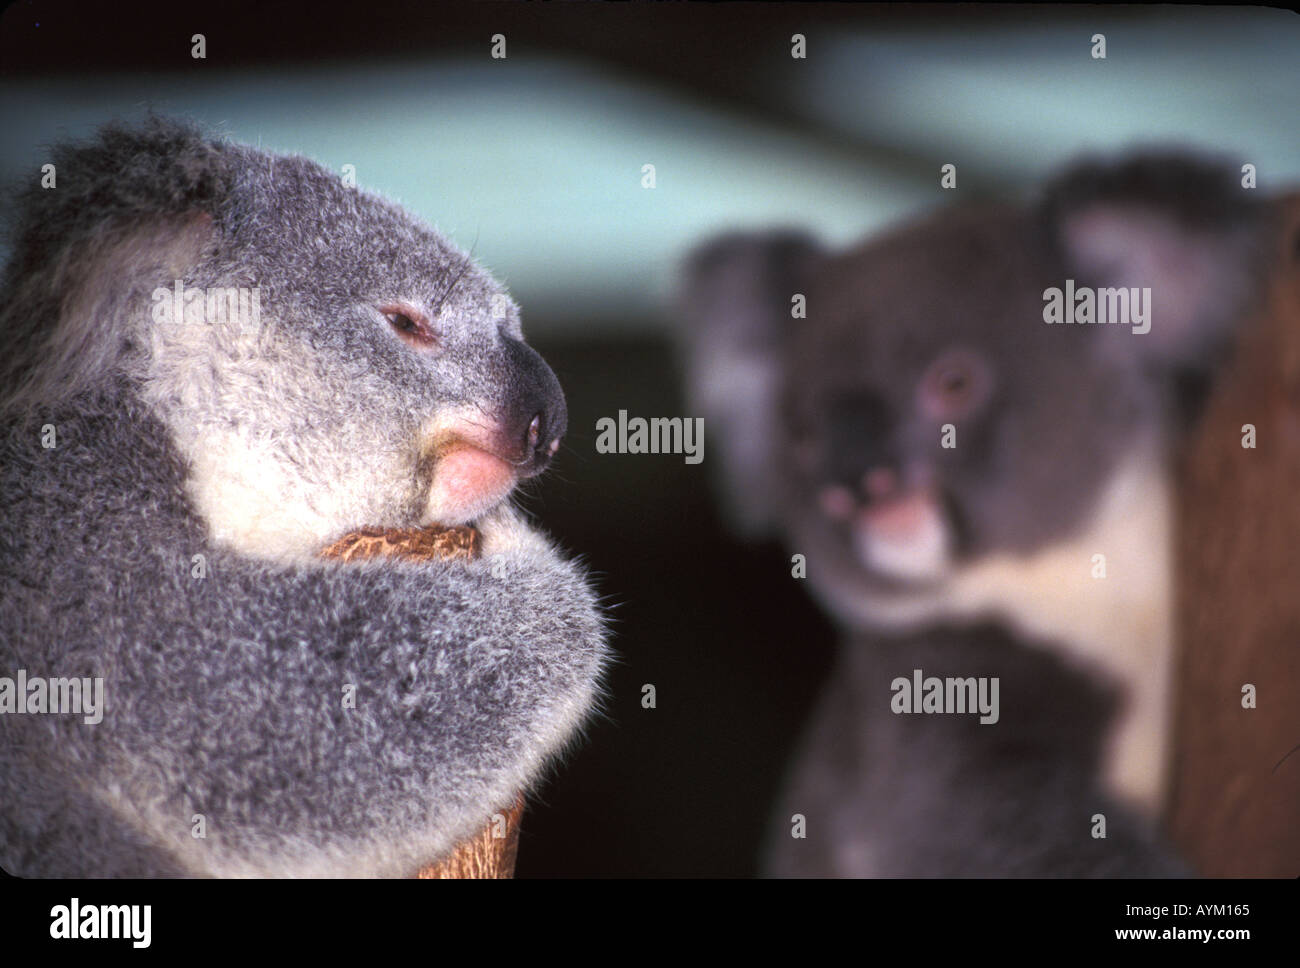 Two Koala bears in Australia appear to be having a disagreement  Stock Photo